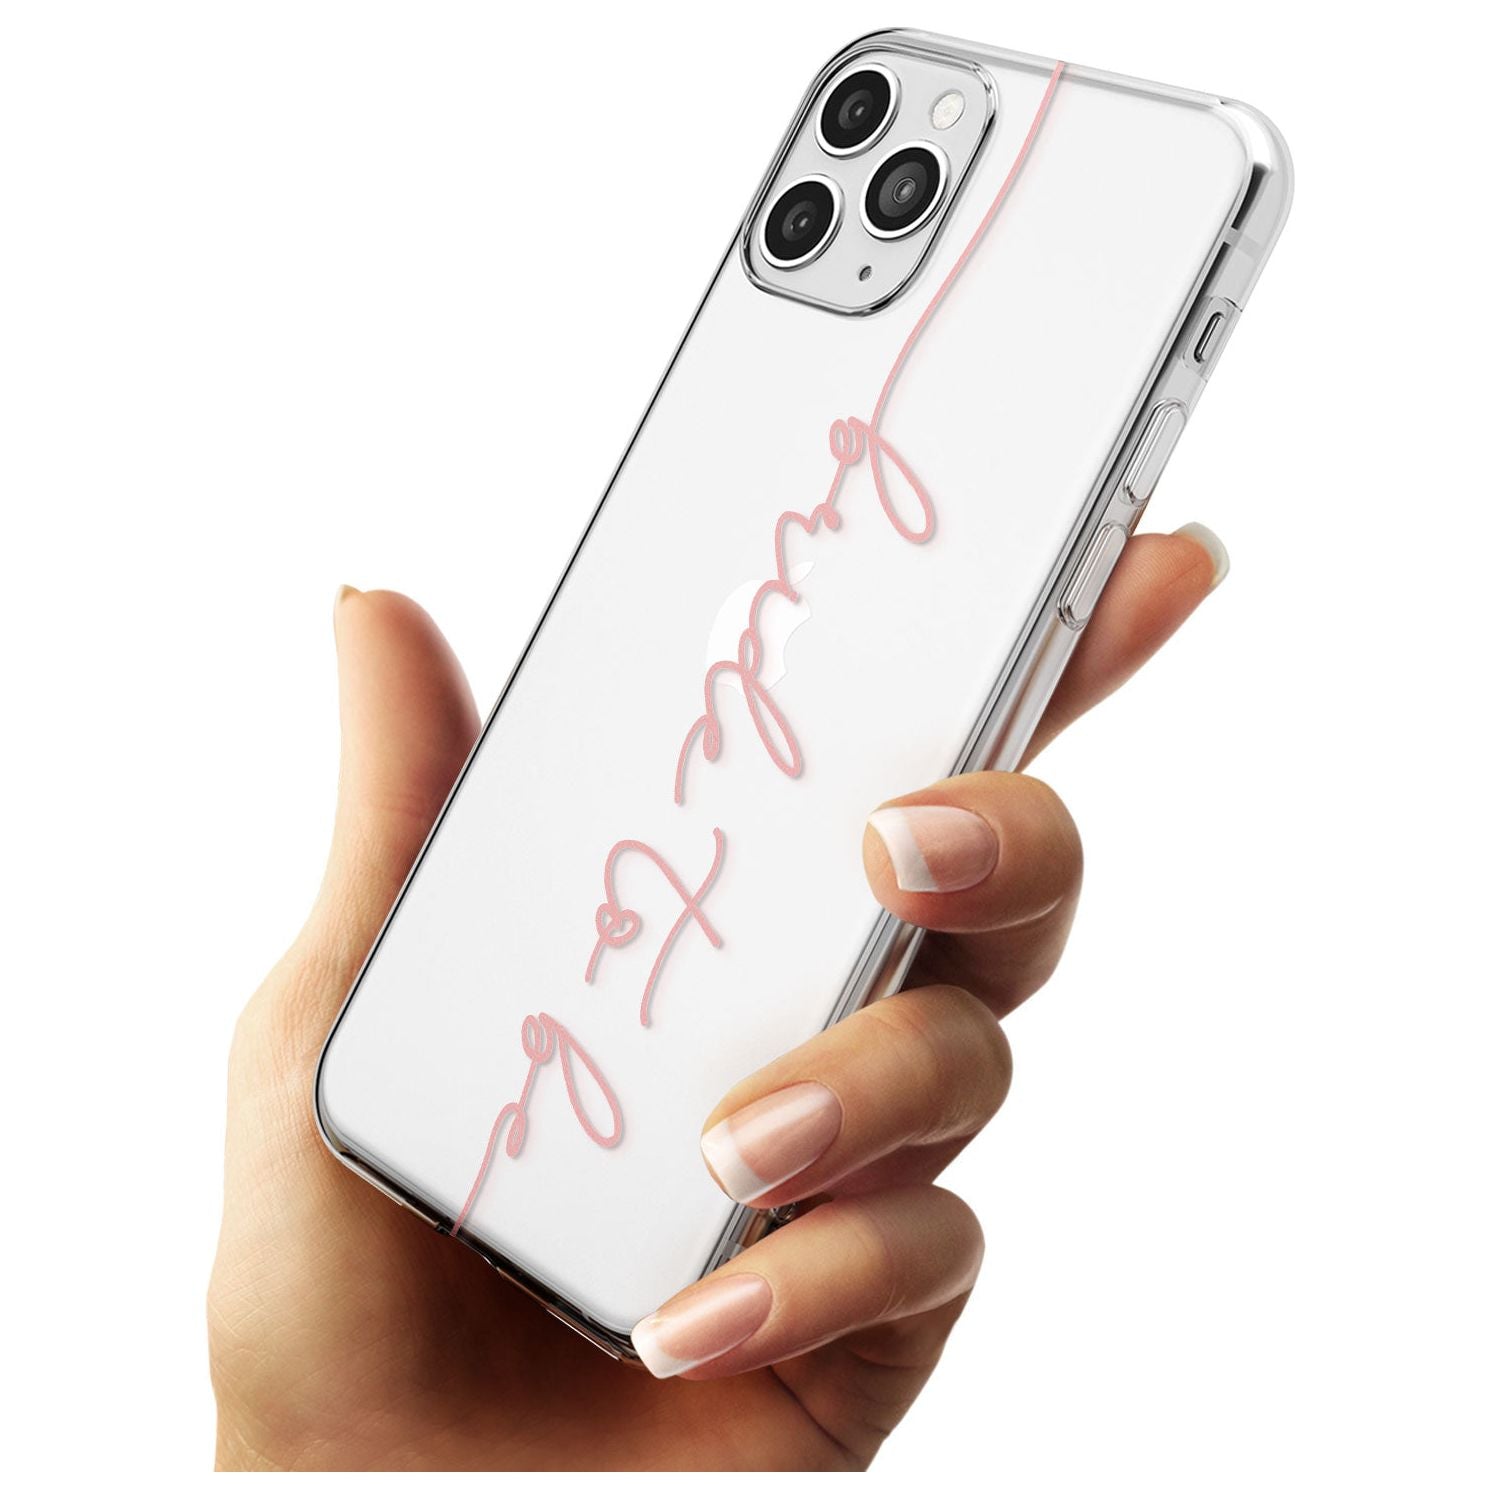 Bride to Be - Transparent Wedding Design Slim TPU Phone Case for iPhone 11 Pro Max